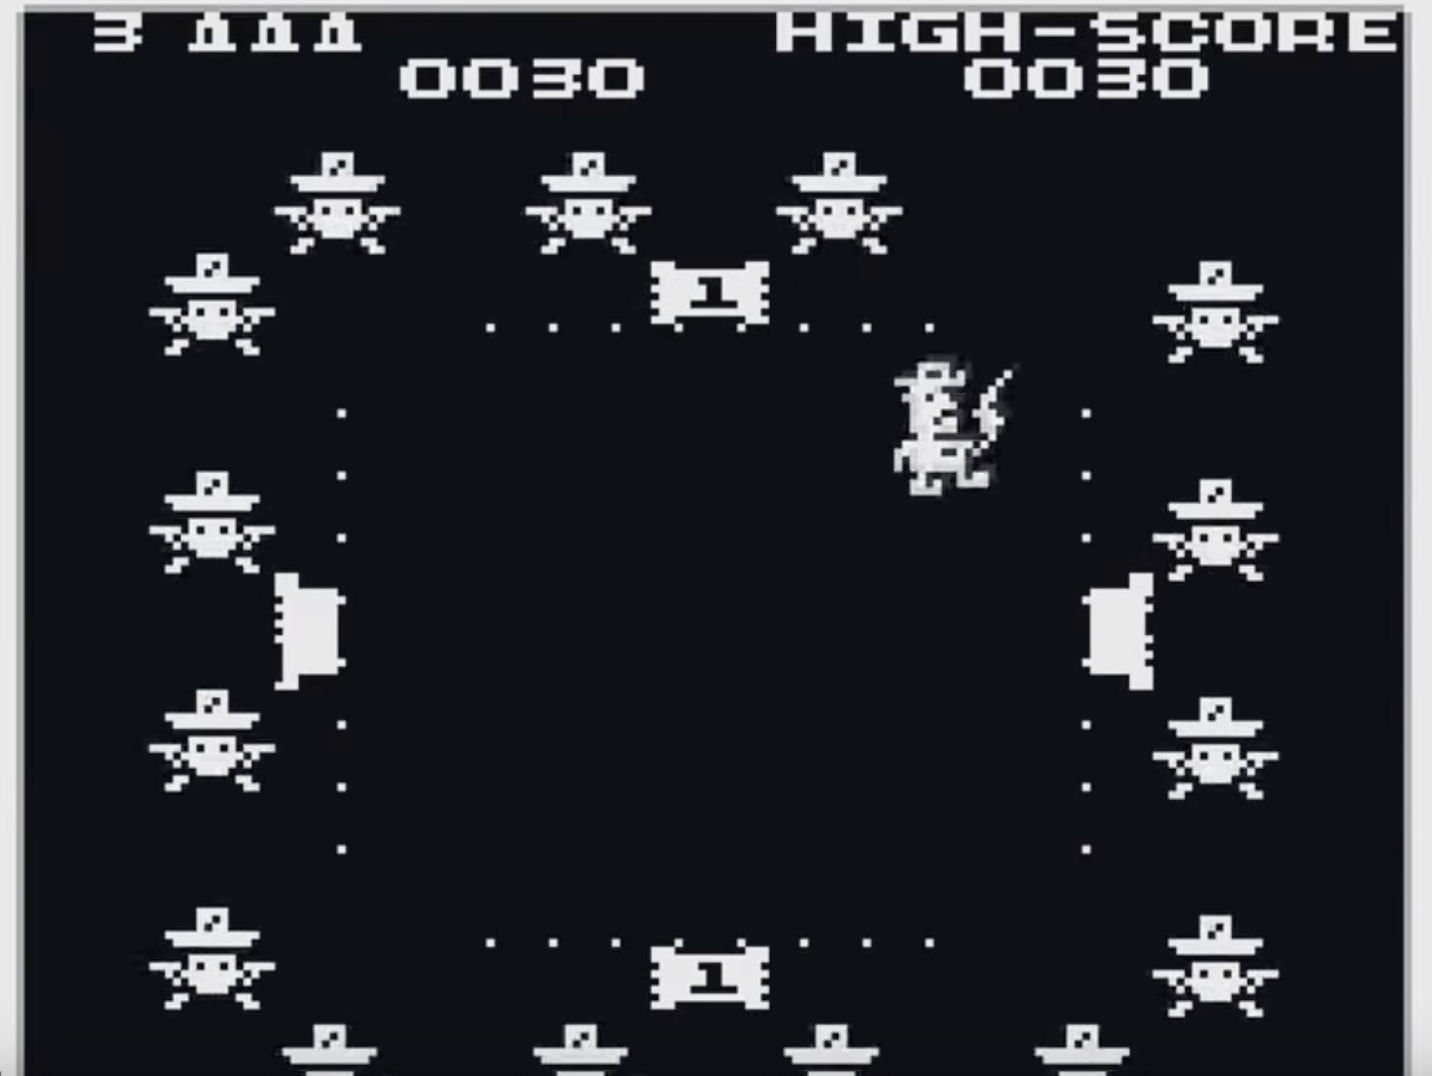 Sheriff arcade game from 1979, designed by Miyamoto.